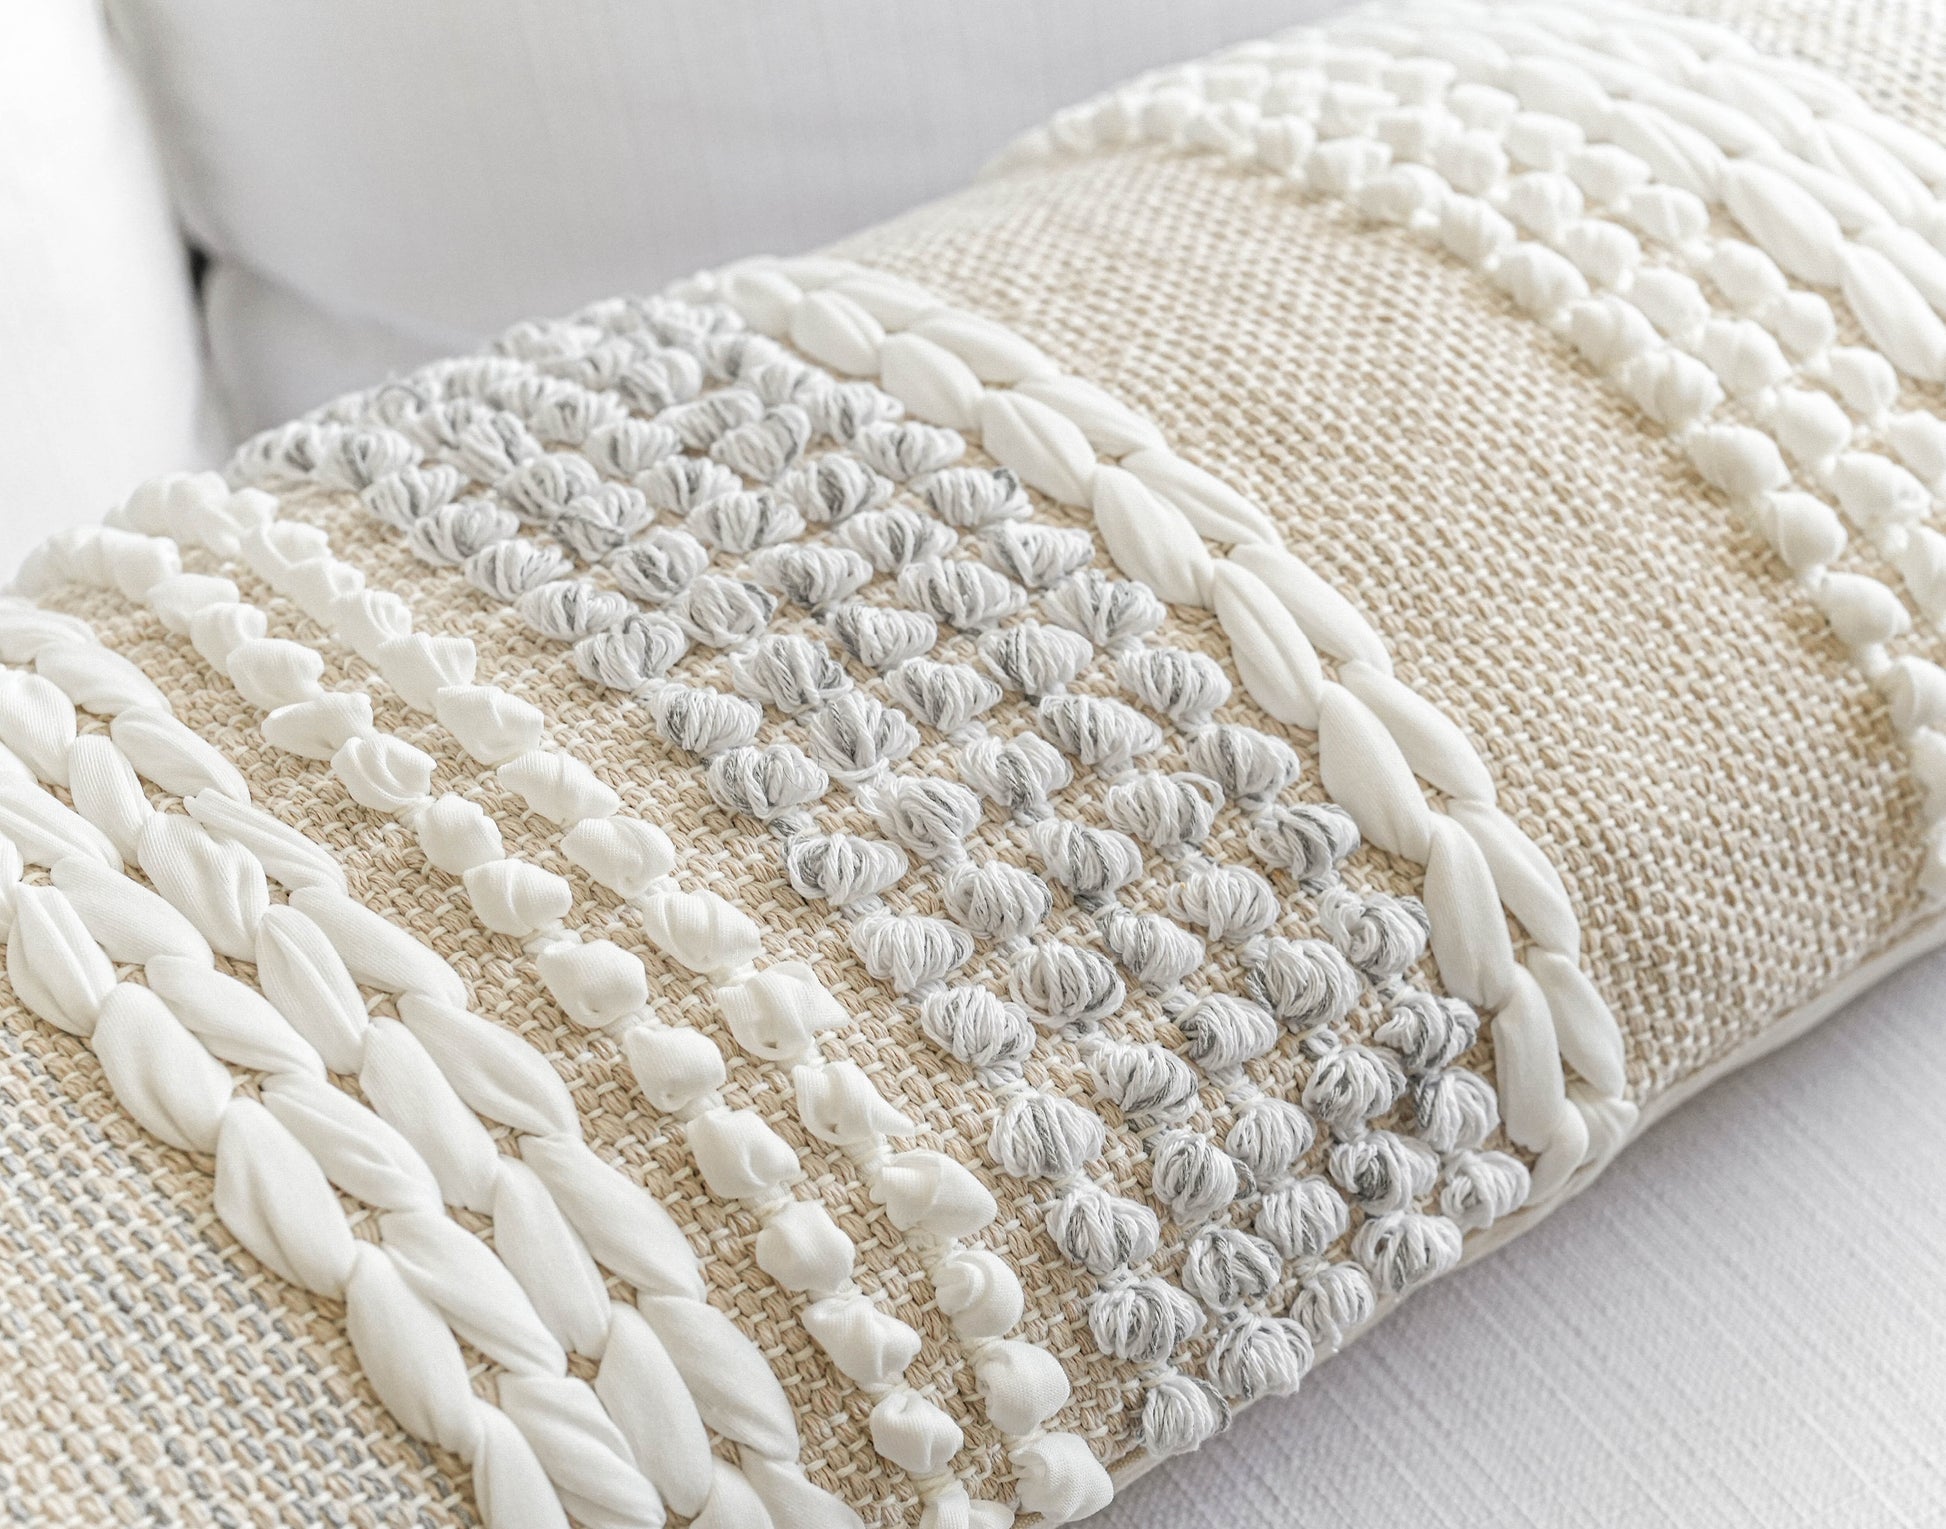 Oversize Embroidered Textured Lumbar Throw Pillow Blush - Opalhouse™